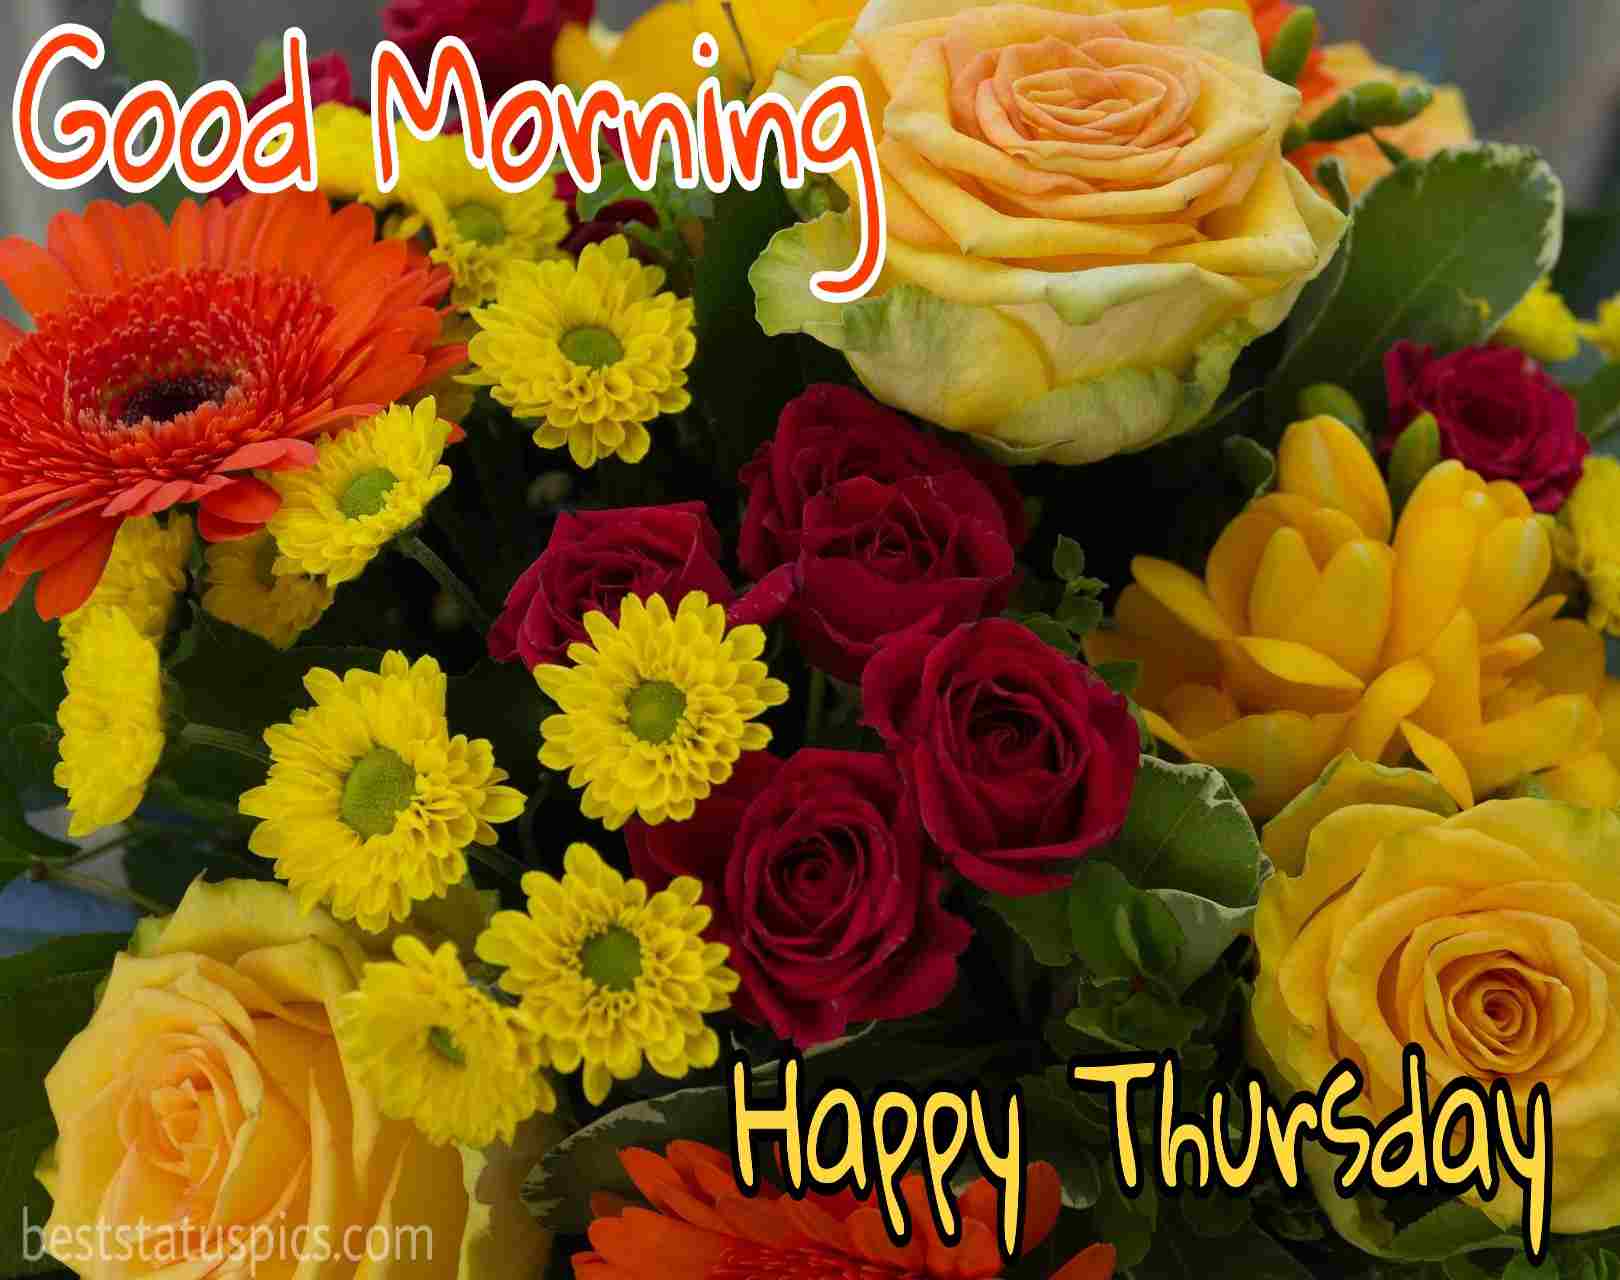 Good Morning Happy Thursday Image